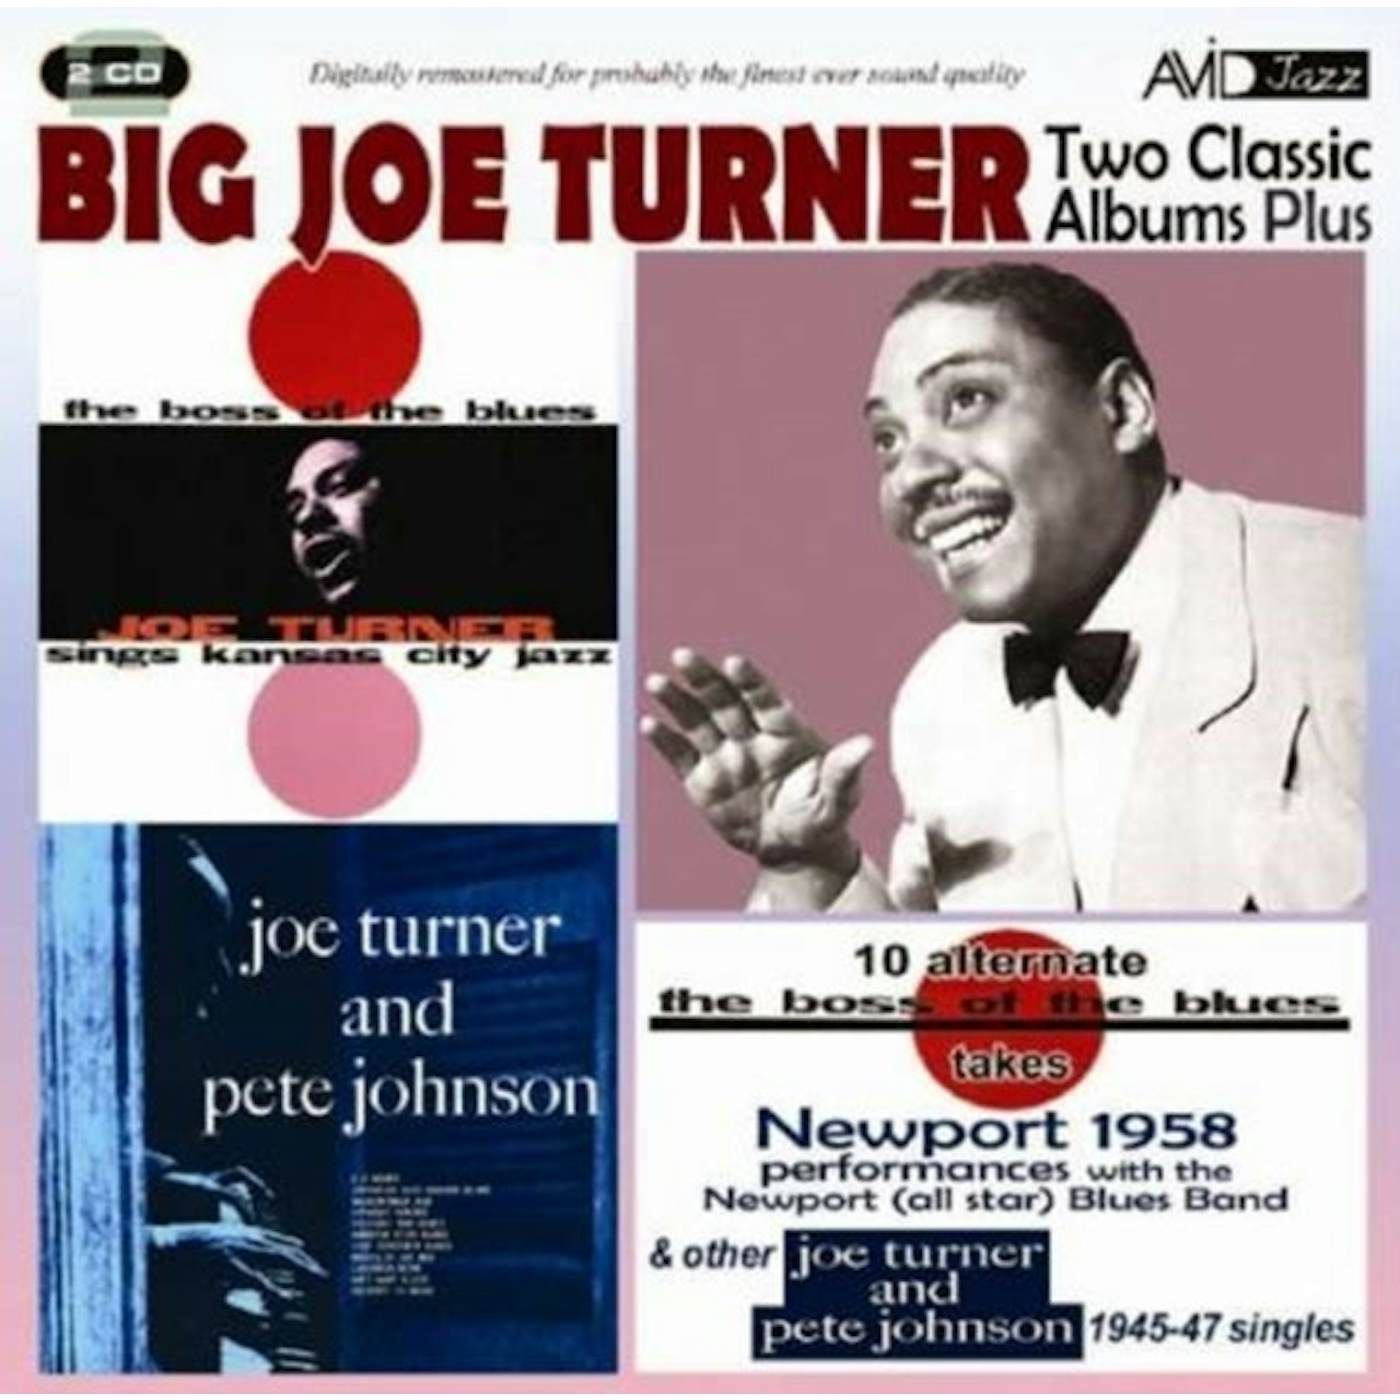 Big Joe Turner CD - Two Classic Albums Plus Other 19 45-47 Singles (The Boss Of The Blues / Joe Turner & Pete Johnson)